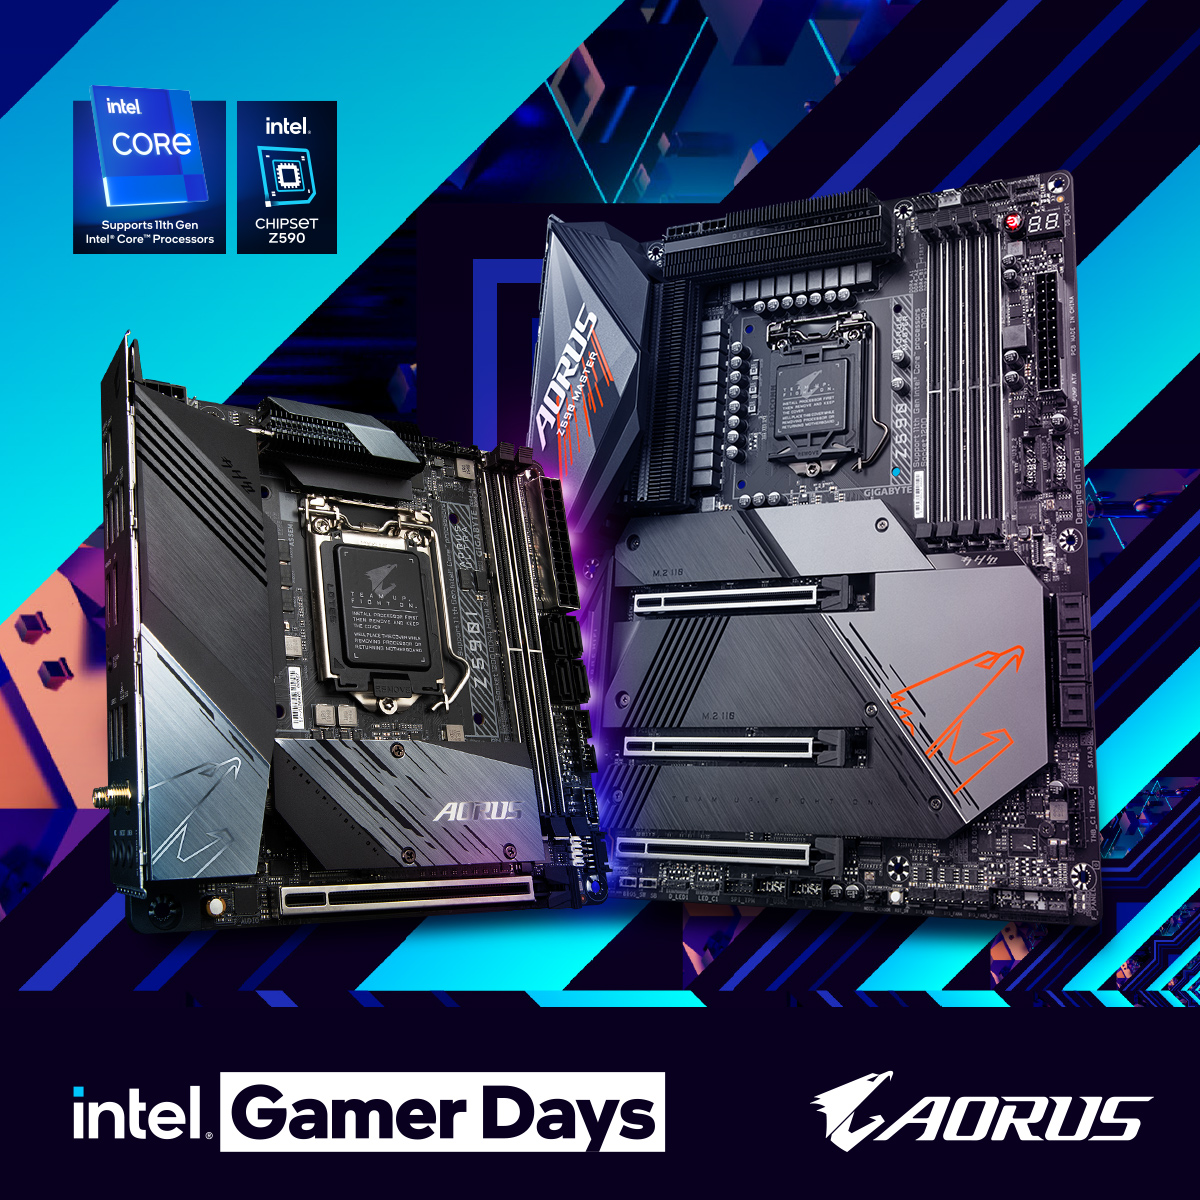 AORUS x Intel Gamer Days 2021